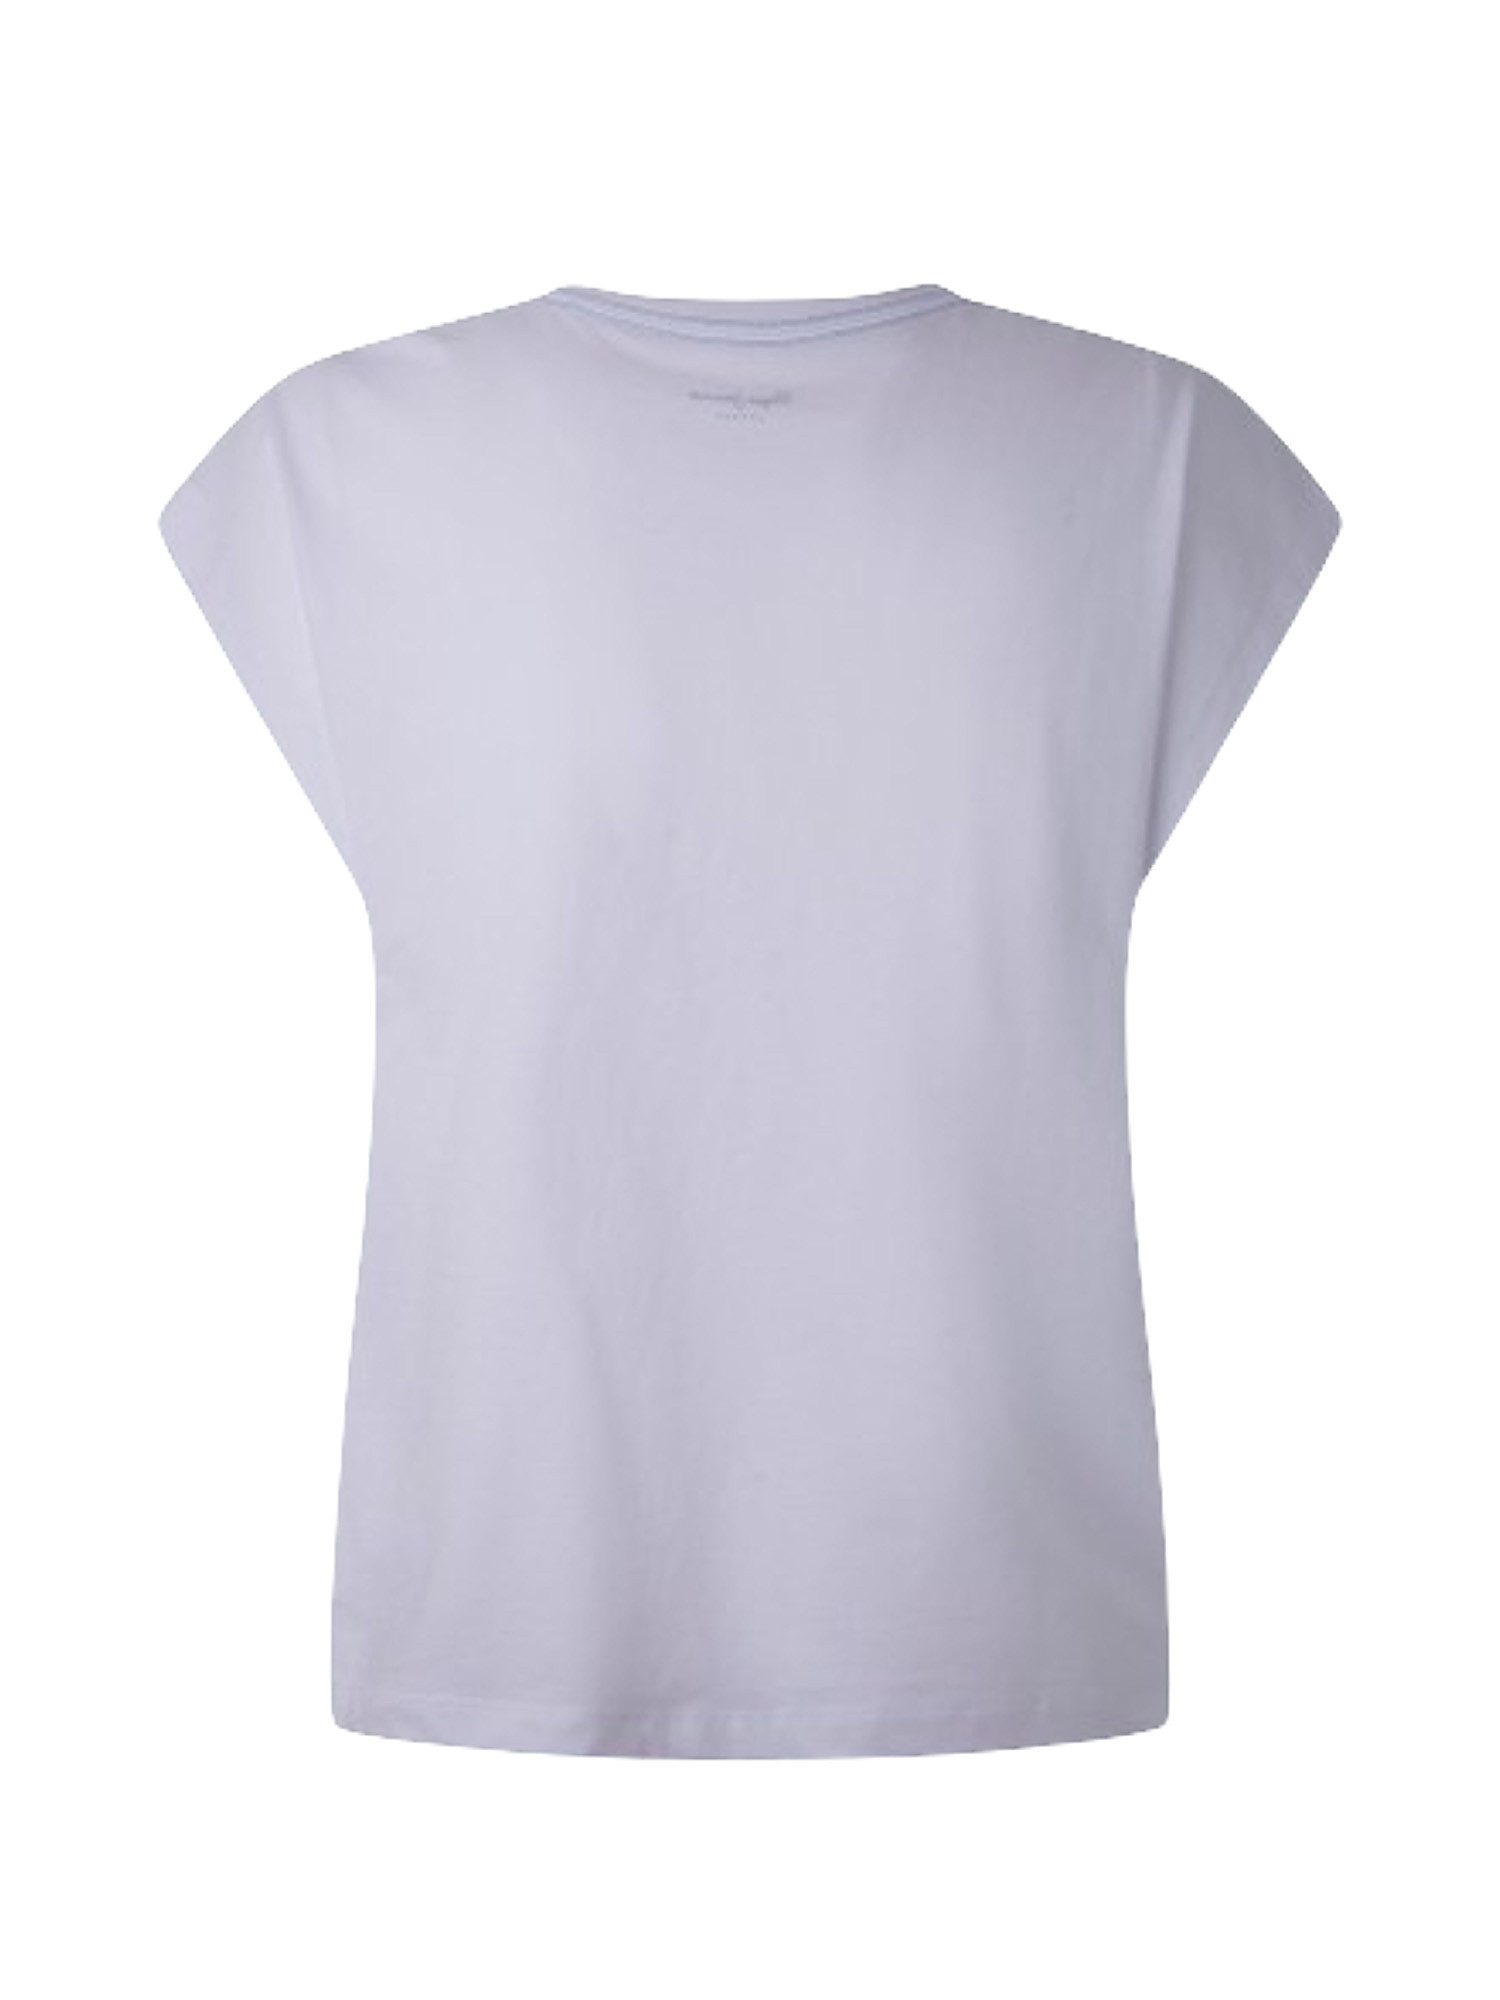 Isadora photo print t-shirt, White, large image number 1